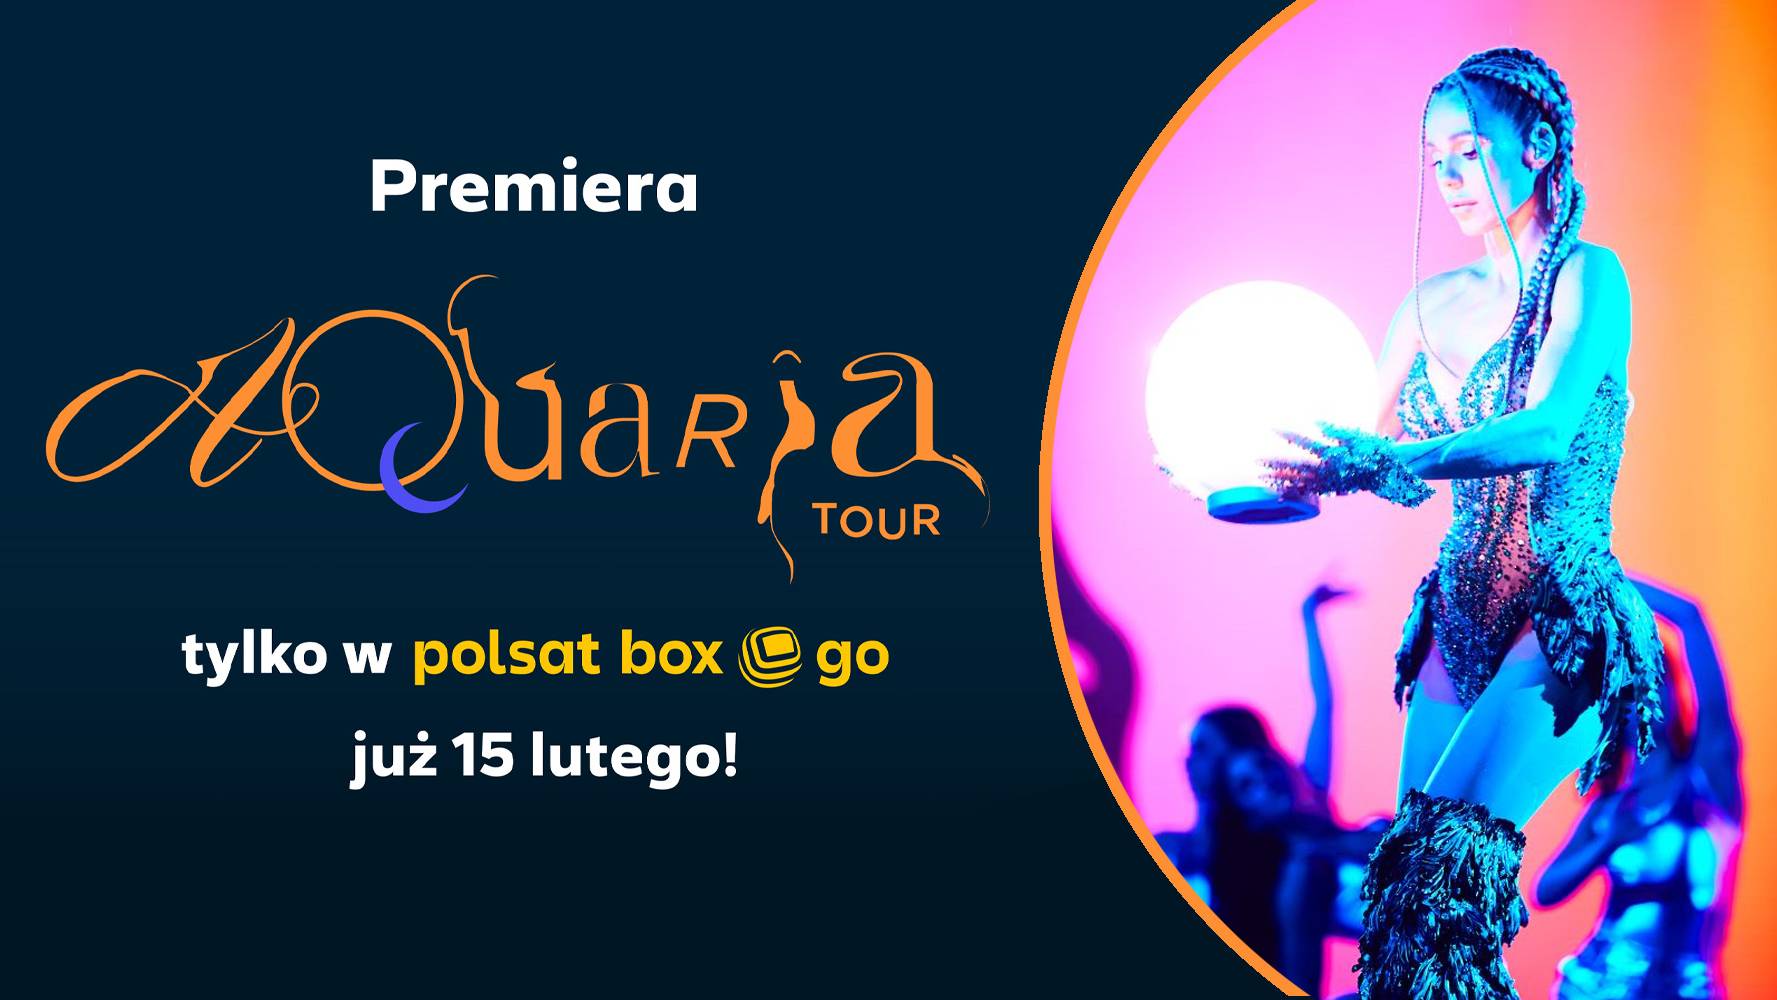 Doda. Dream Show - Aquaria Tour w Polsat Box Go. Oglądaj! - Polsat.pl